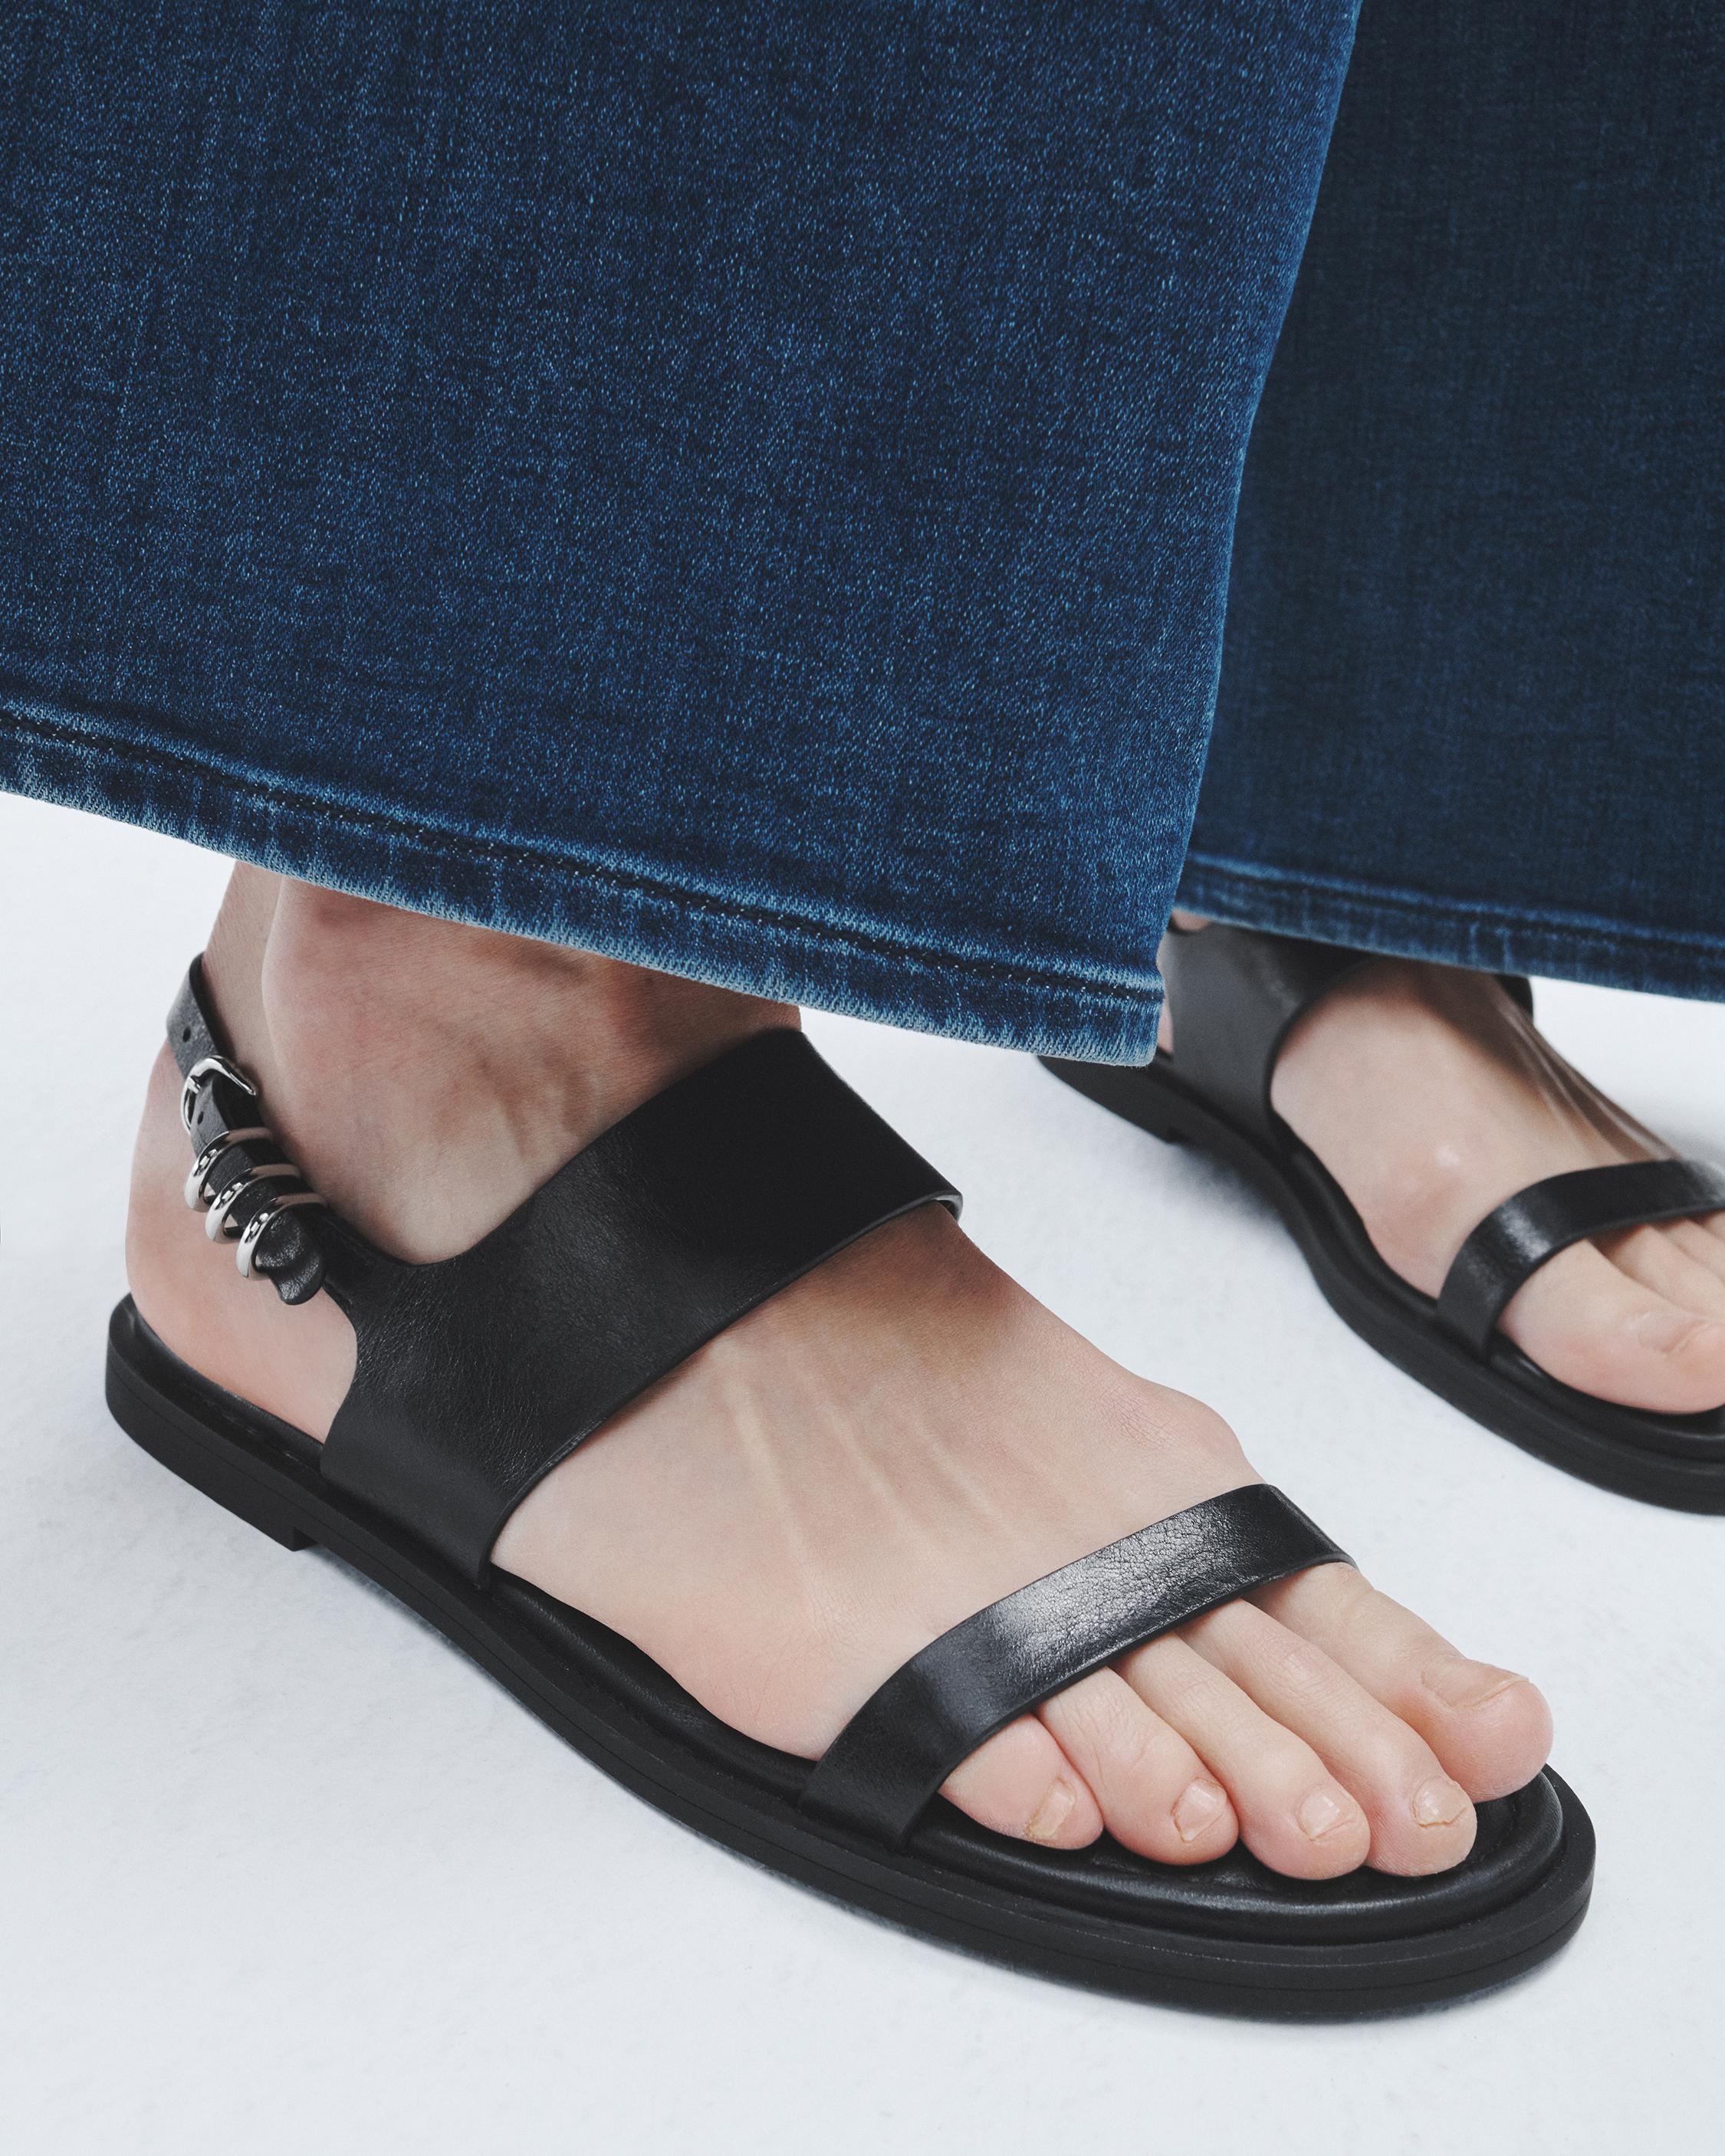 Geo Sandal - Leather
Flat Sandal - 2